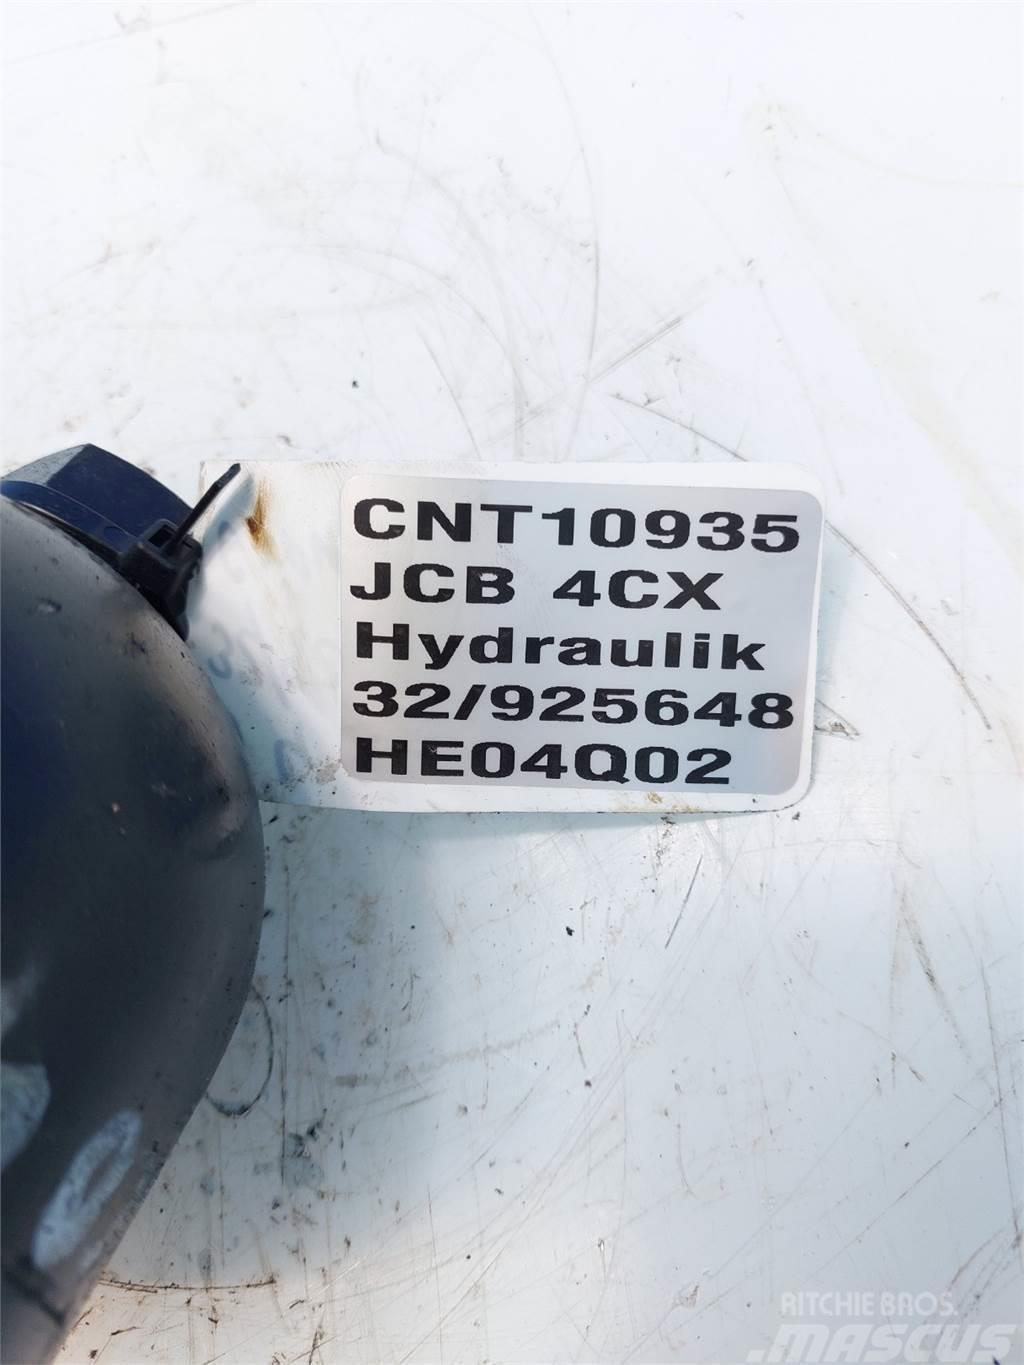 JCB 4CX Hydraulik